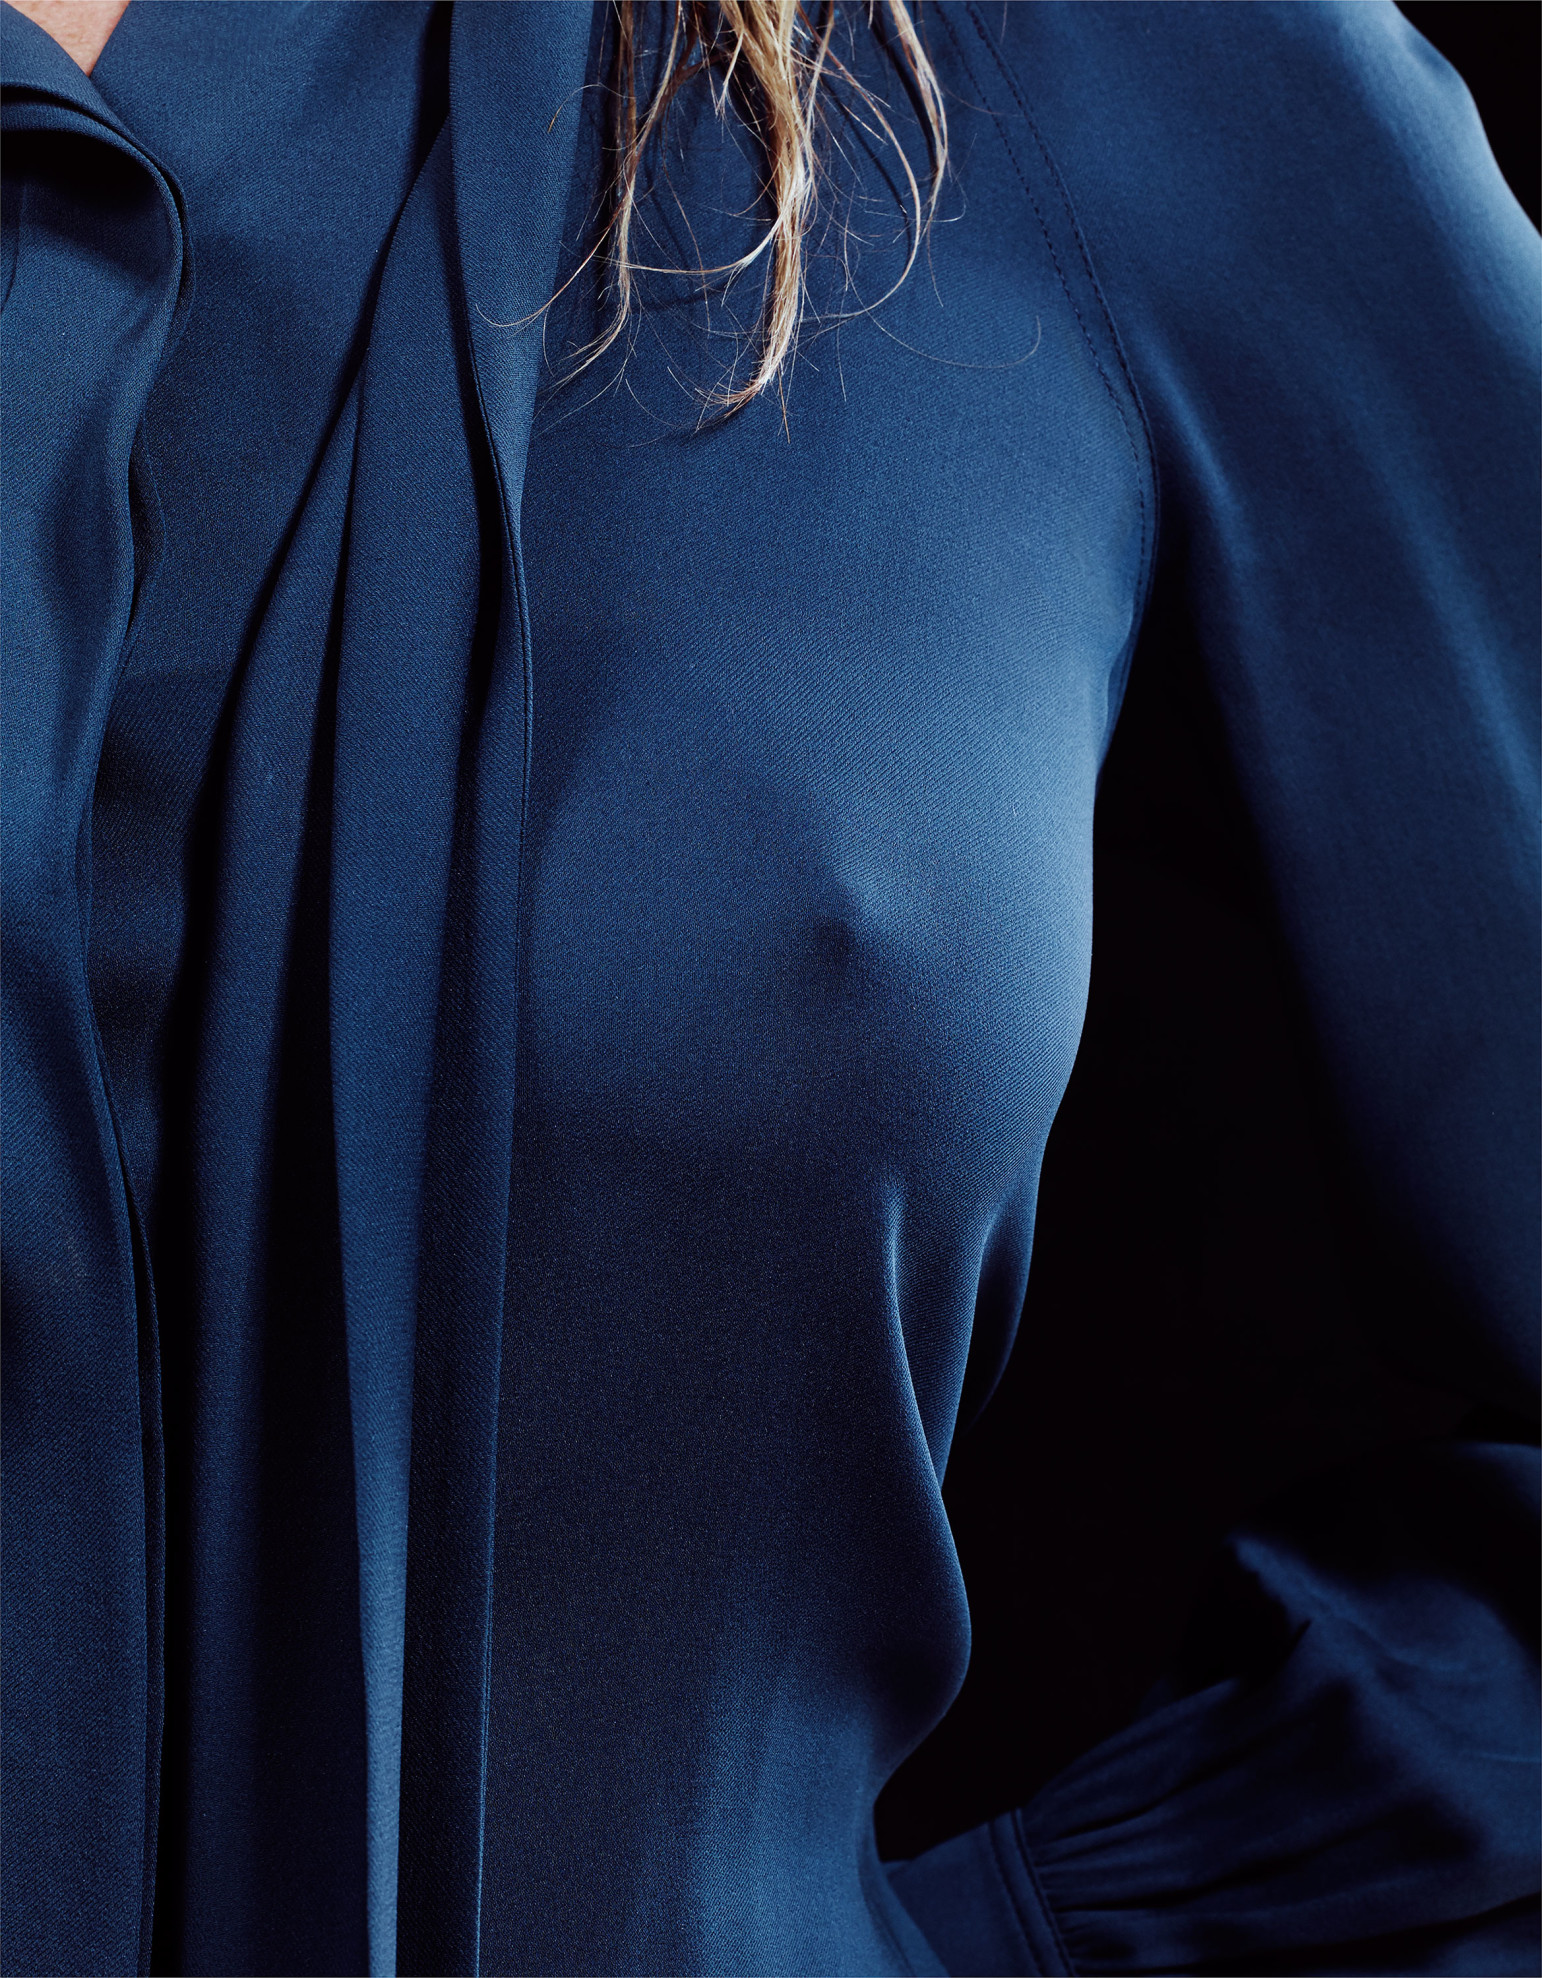 Kate Moss Naked (8 Photos)